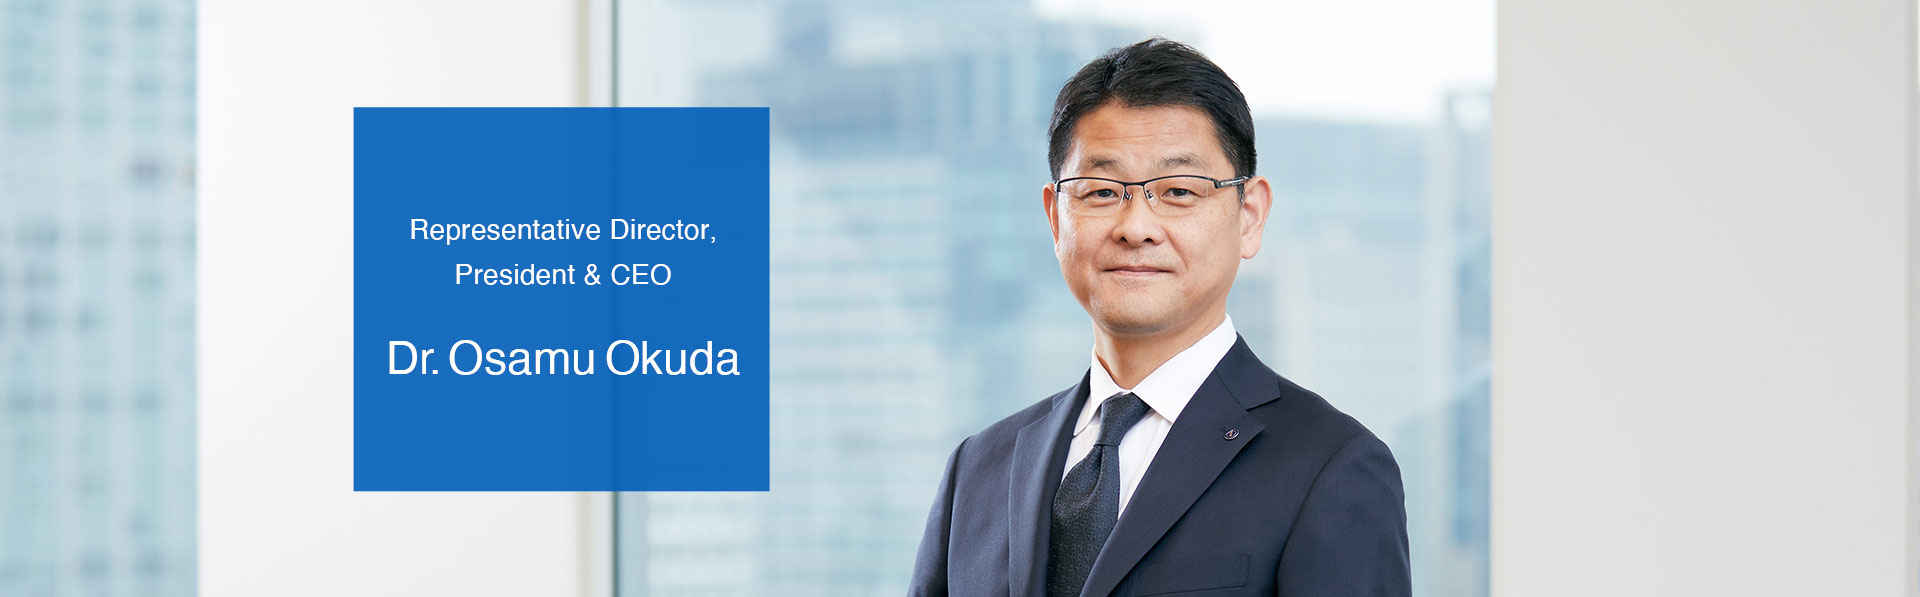 Representative Director, President & CEO Dr. Osamu Okuda